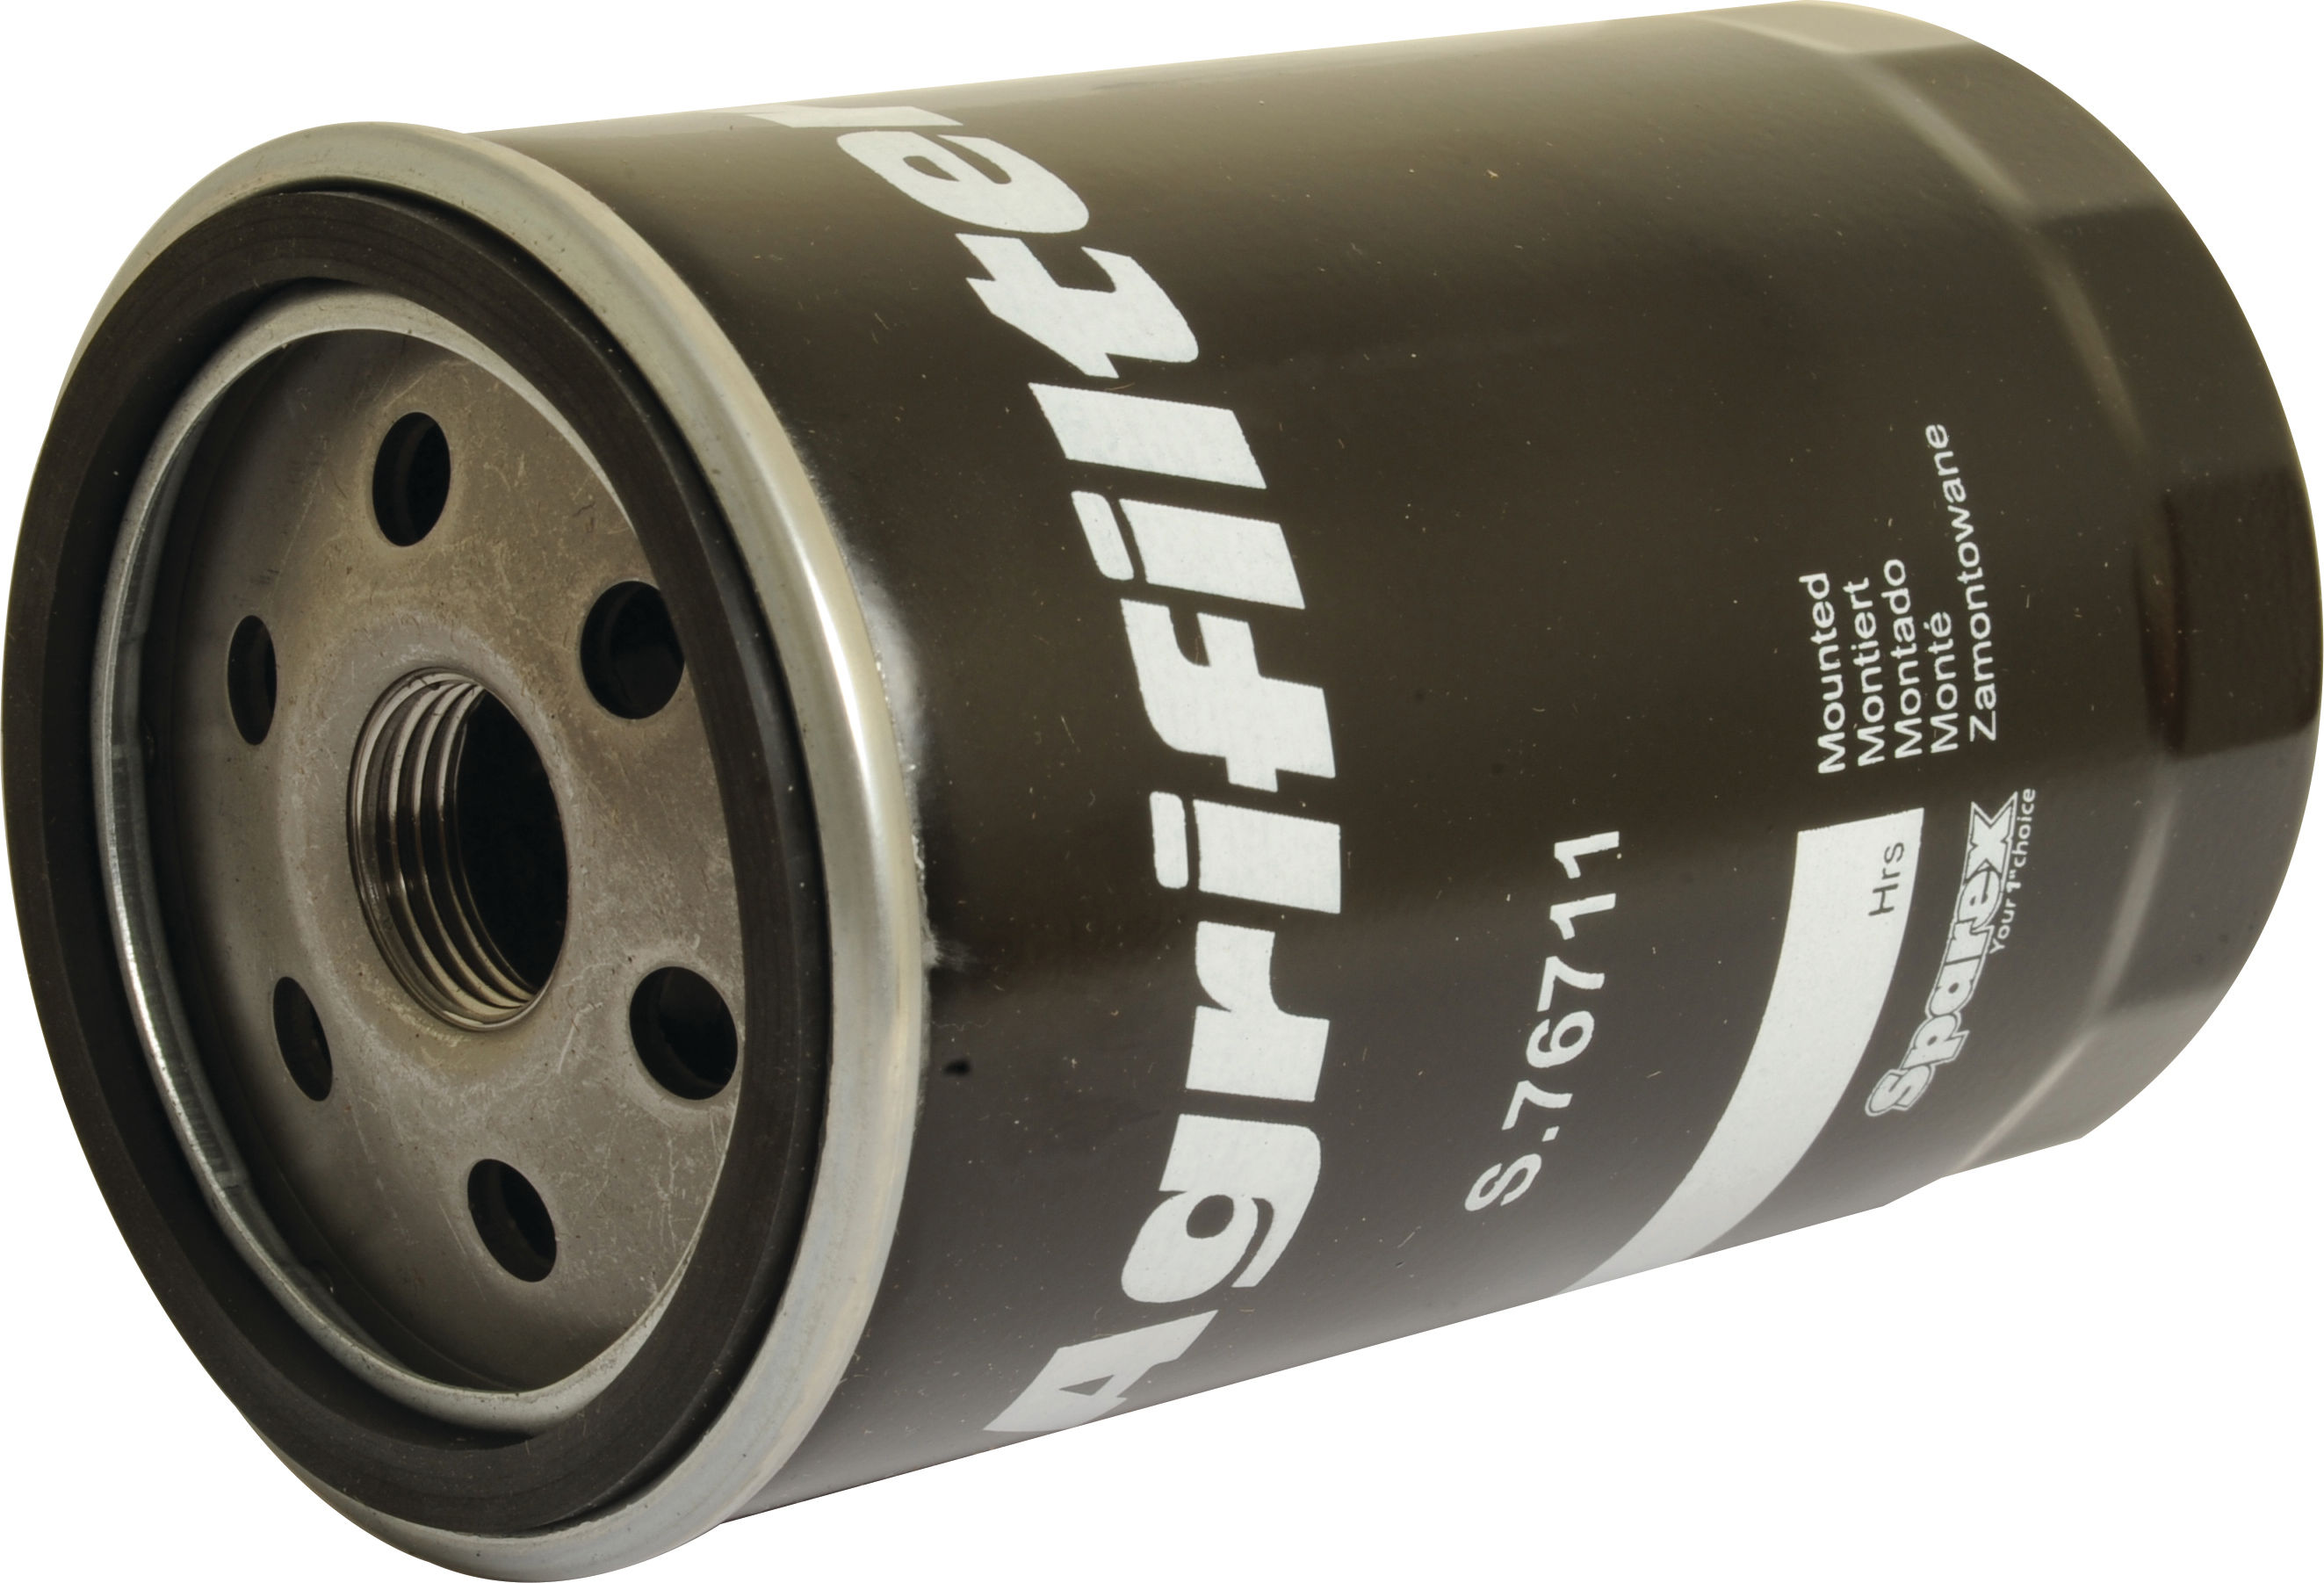 Filtre a huile hydraulique transmission moteur Case IH 3147441R91 adaptable  Filtre hydraulique - AGZ000099782